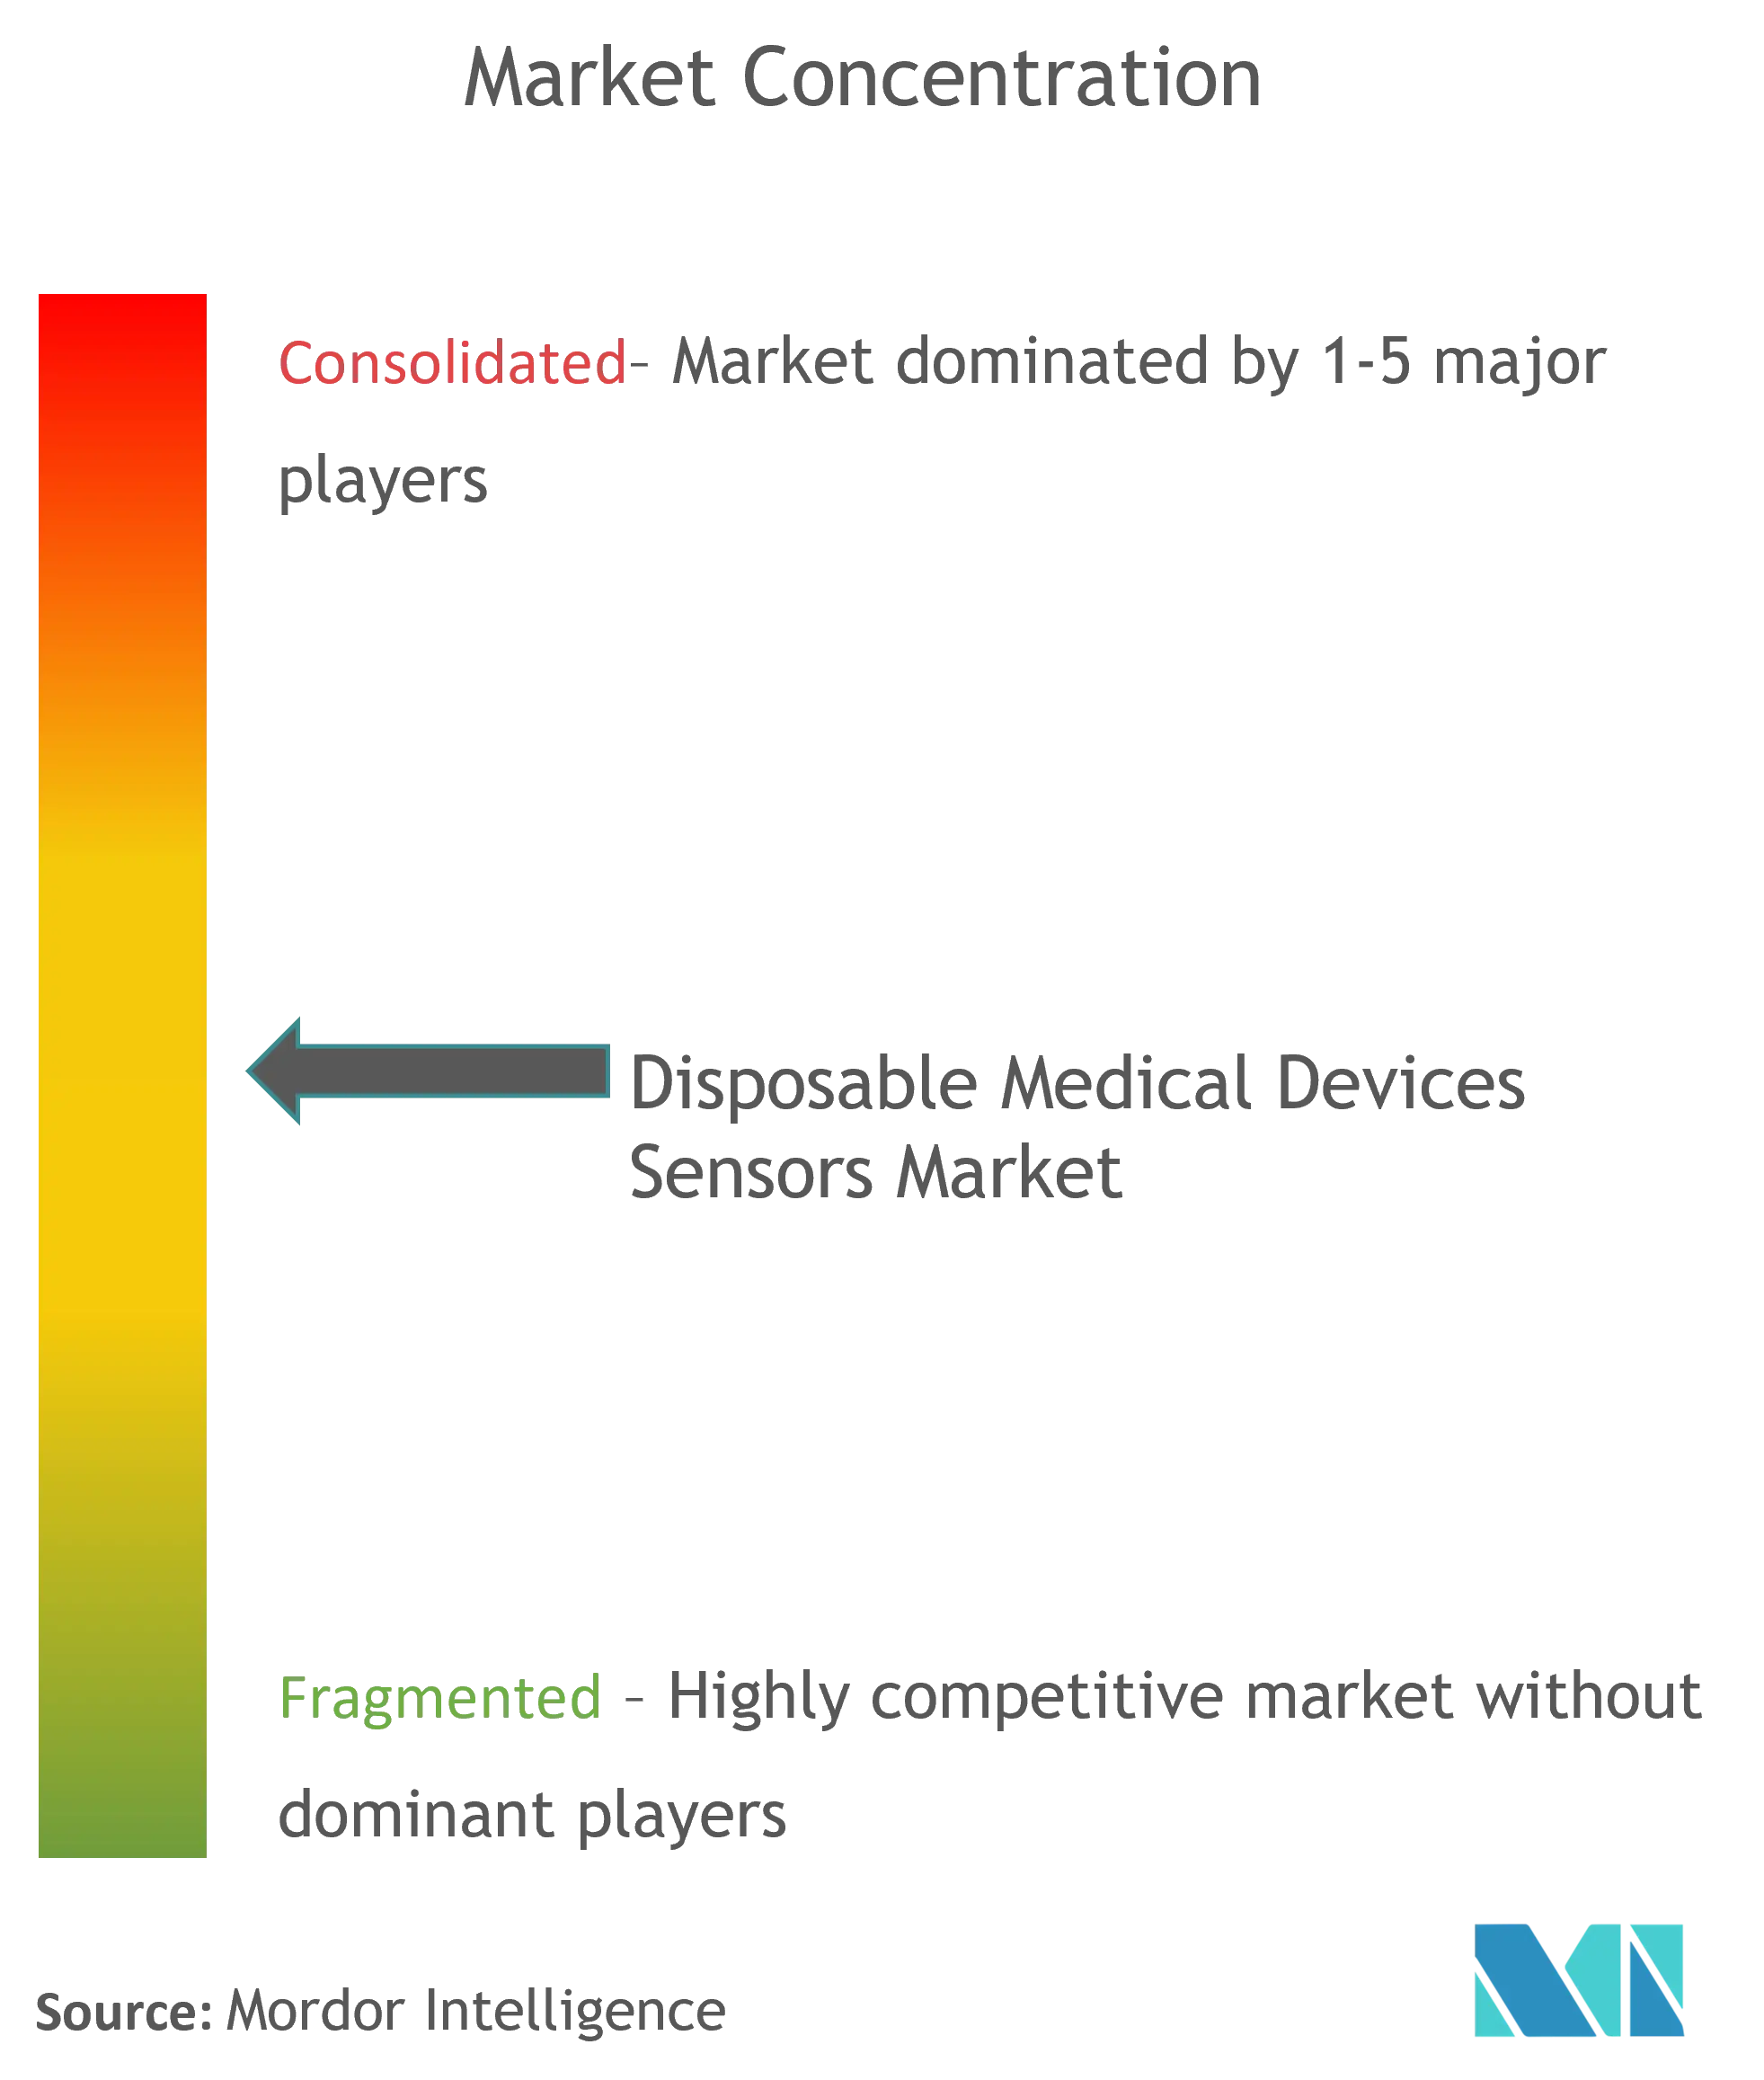 Global Disposable Medical Devices Sensors Market Concentration